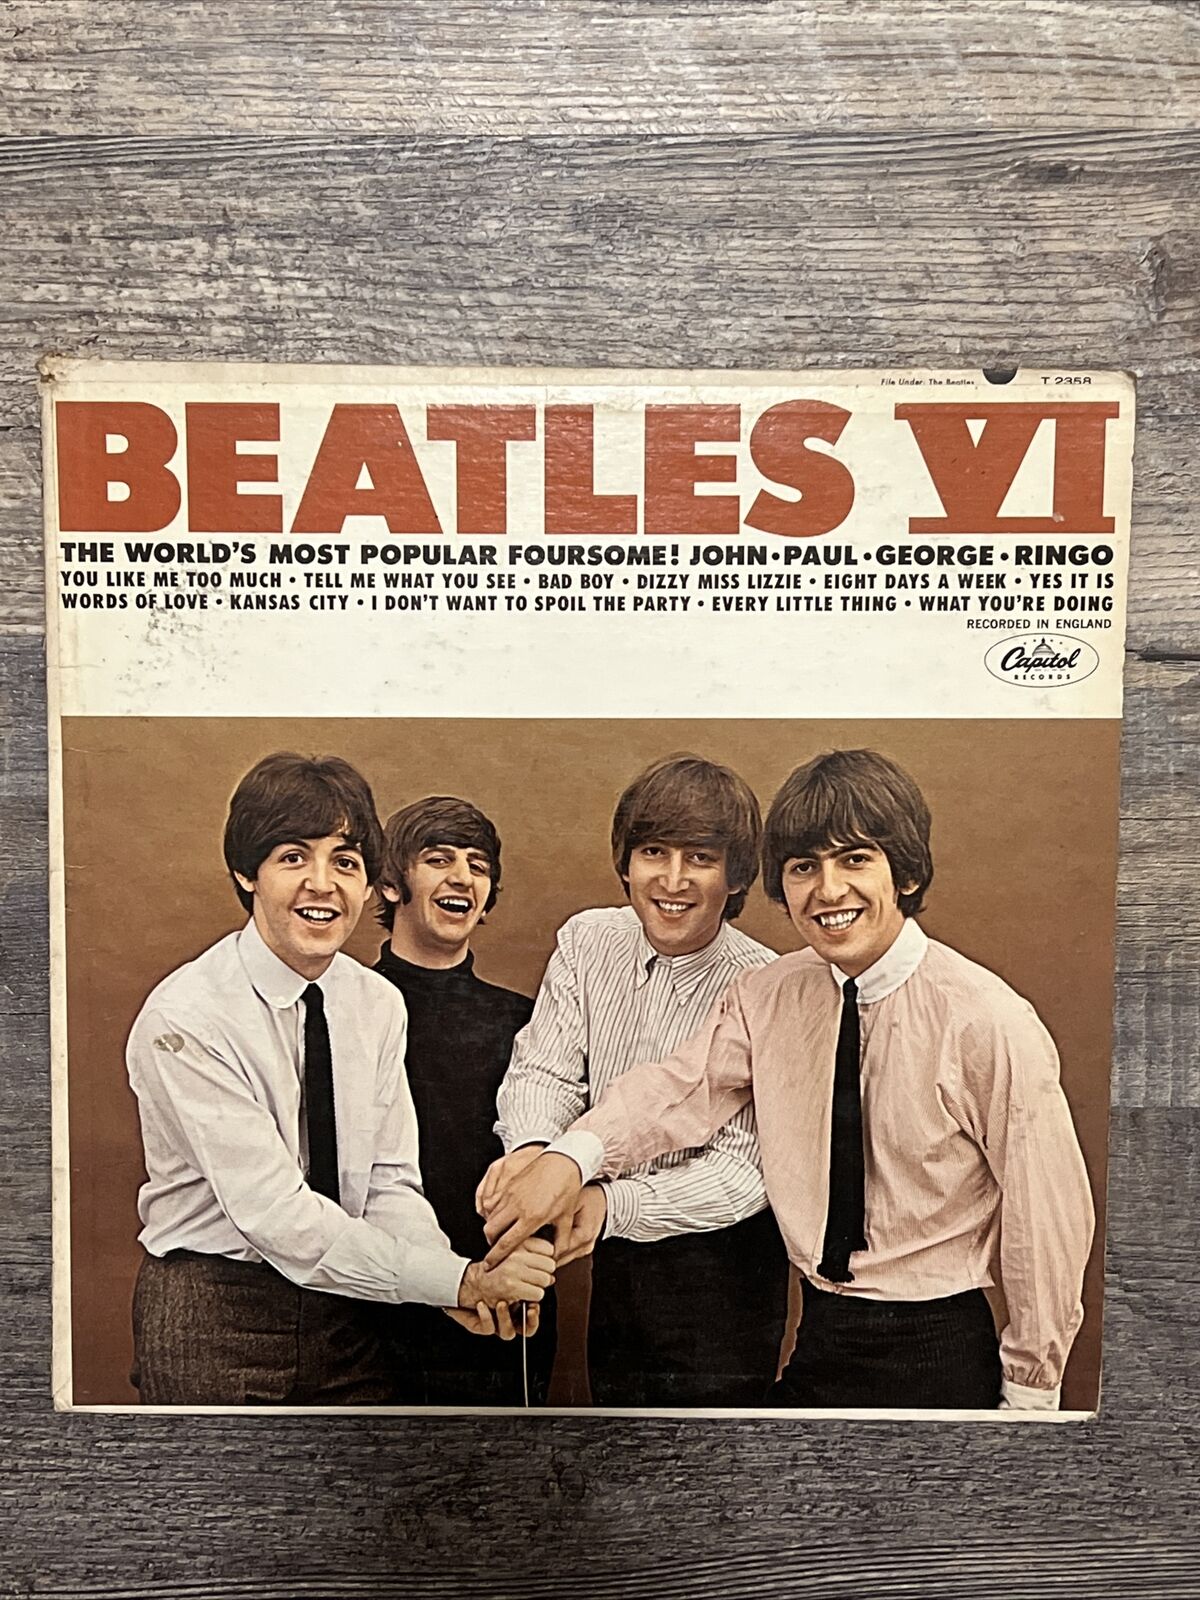 The Beatles VI Original First US Pressing 1965 CAPITOL T-2358 Rare Vintage LP